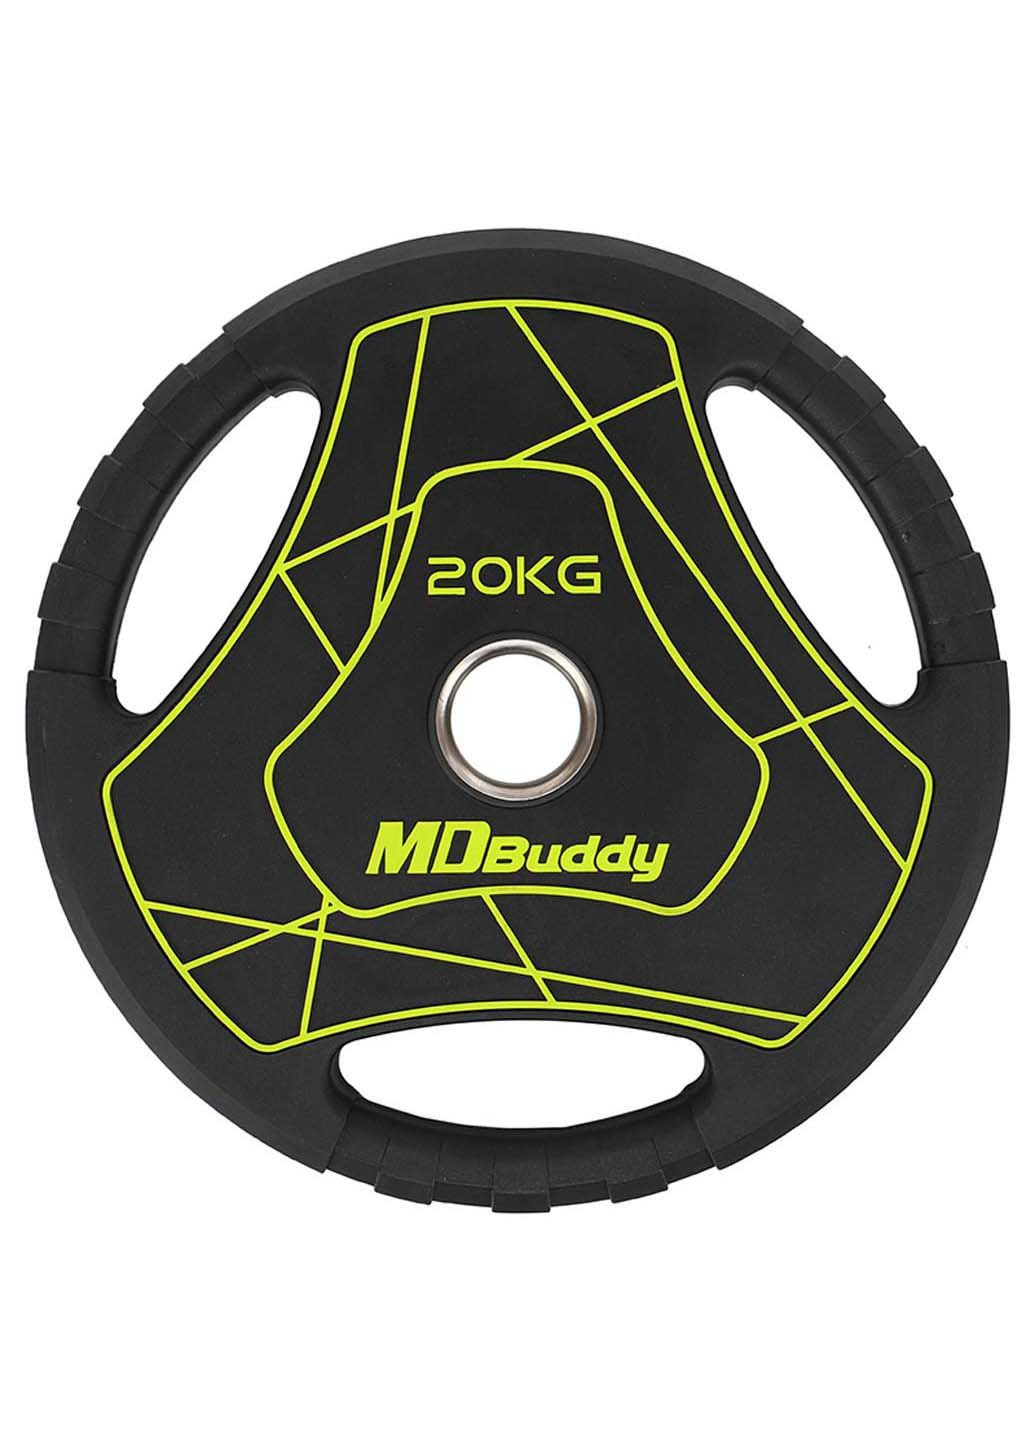 Блины диски TA-9647 20 кг MDbuddy (286043868)